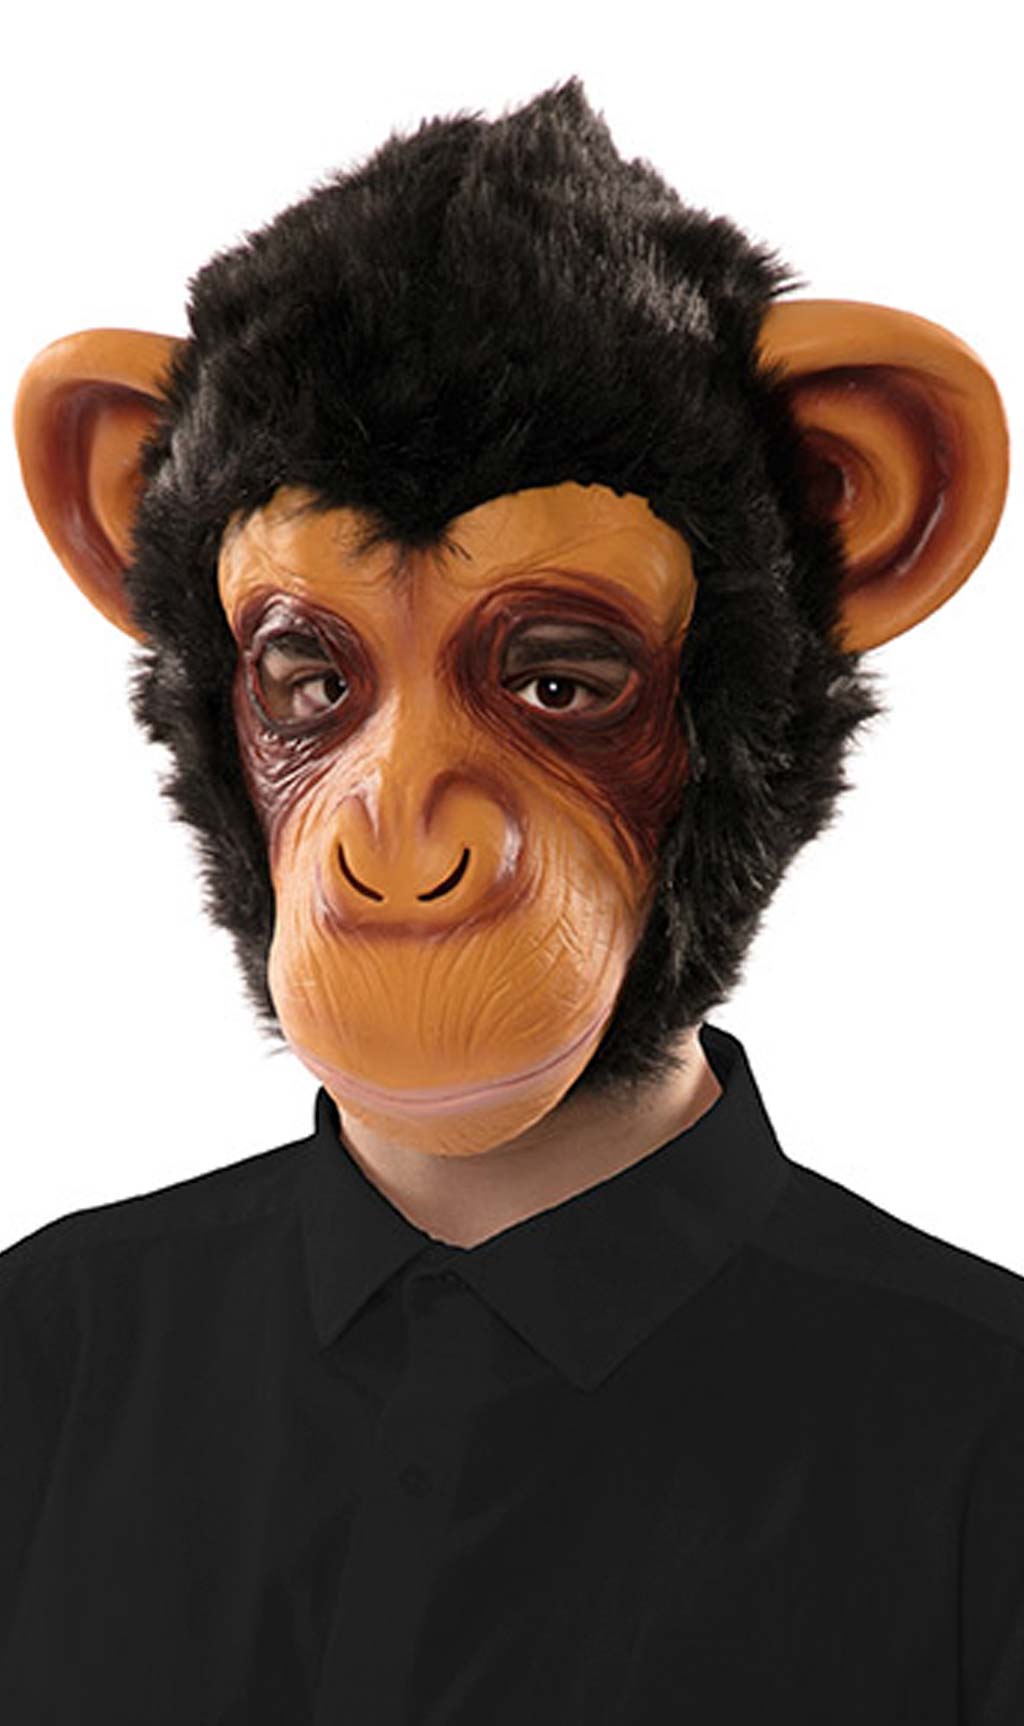 Traurige Schimpanse Maske aus Latex